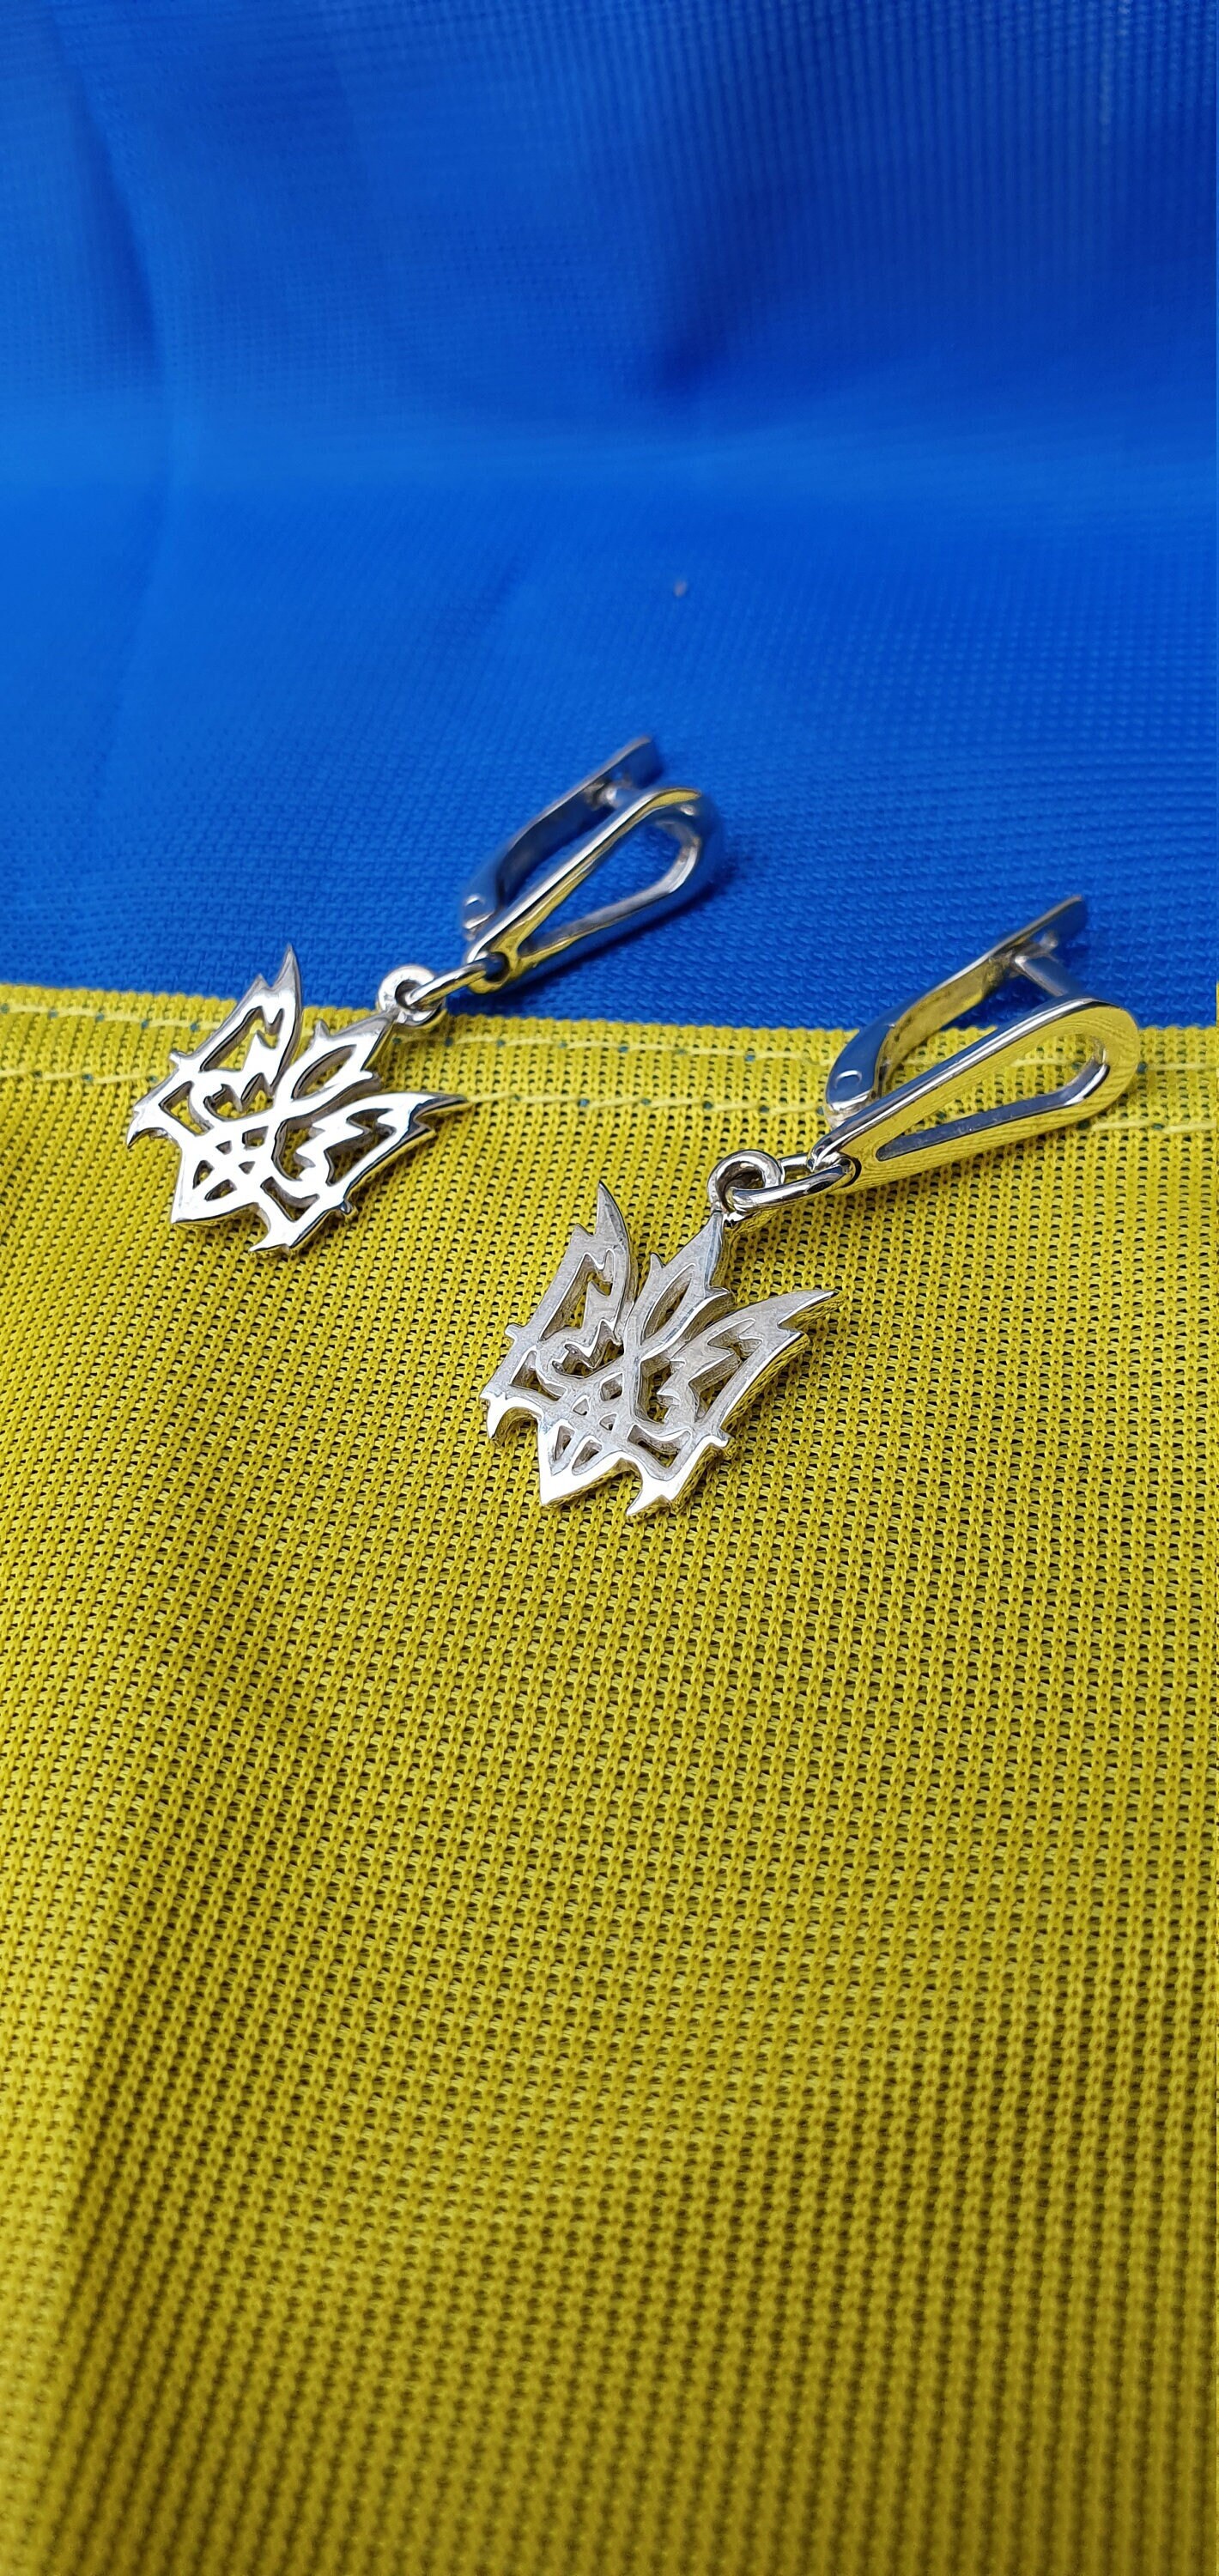 Earrings Ukrainian Emblem, Ukrainian Accessories